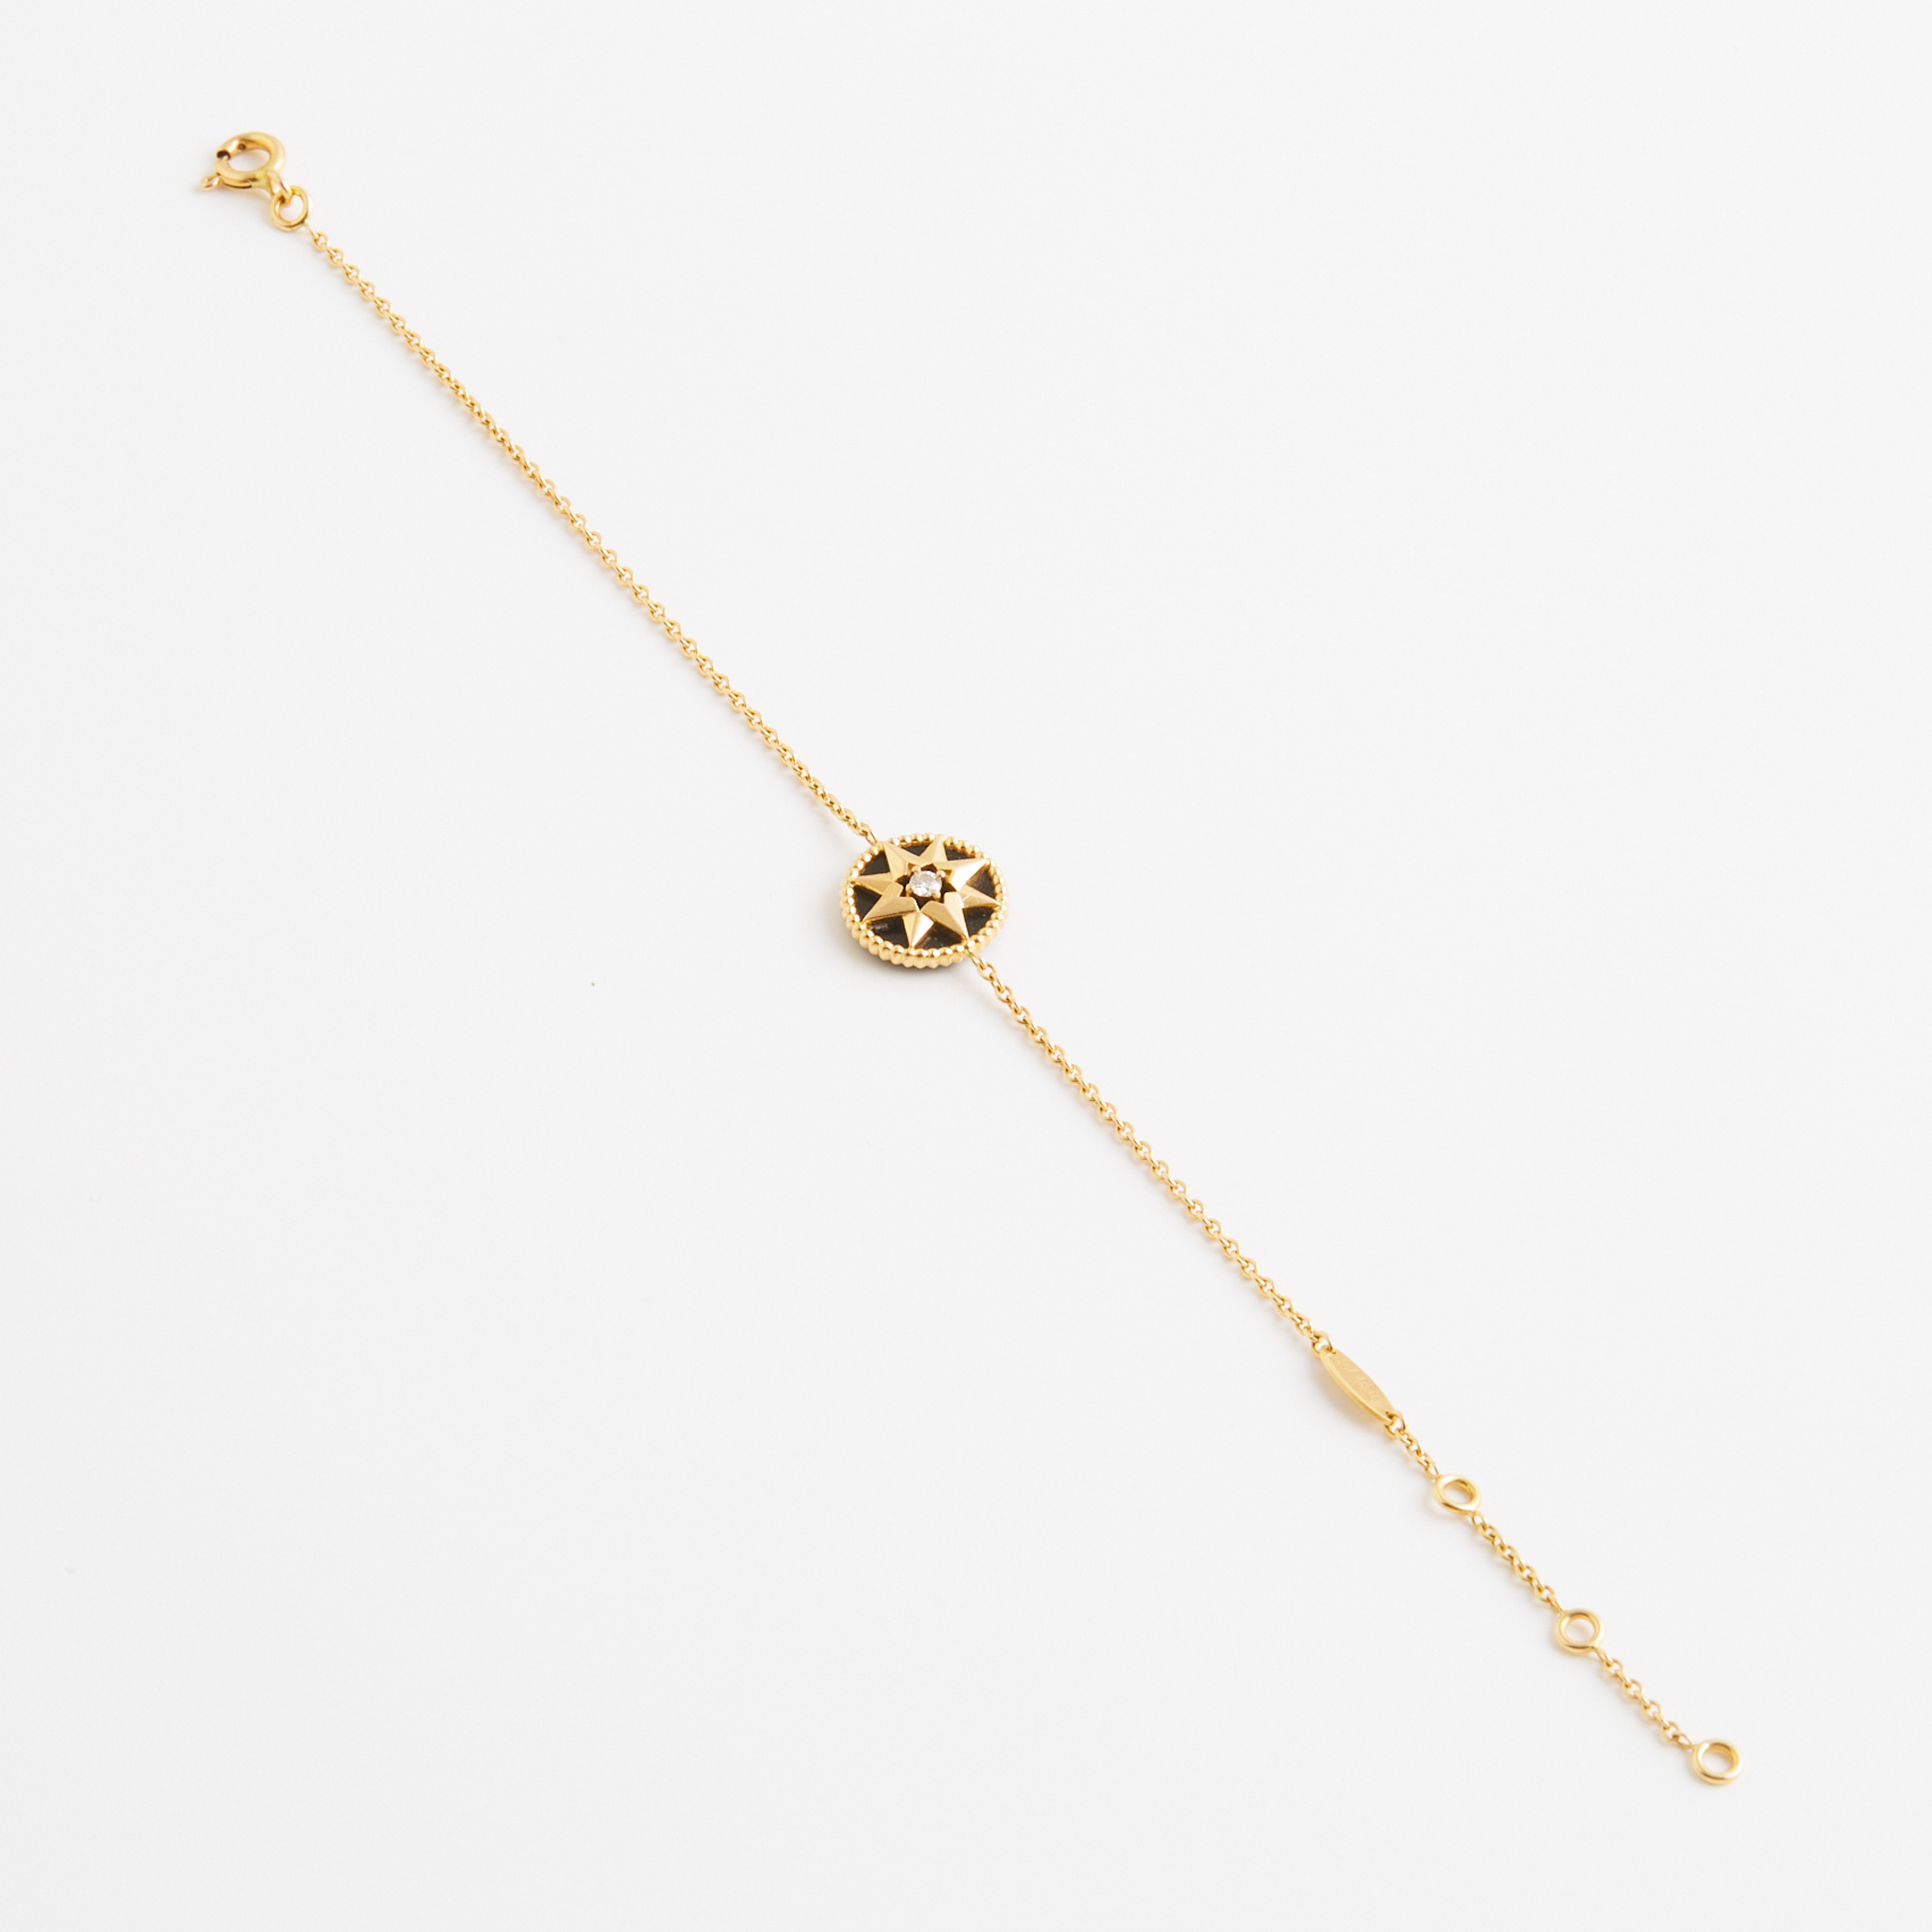 Christian Dior 'Rose Des Vents' 18k Yellow Gold Bracelet